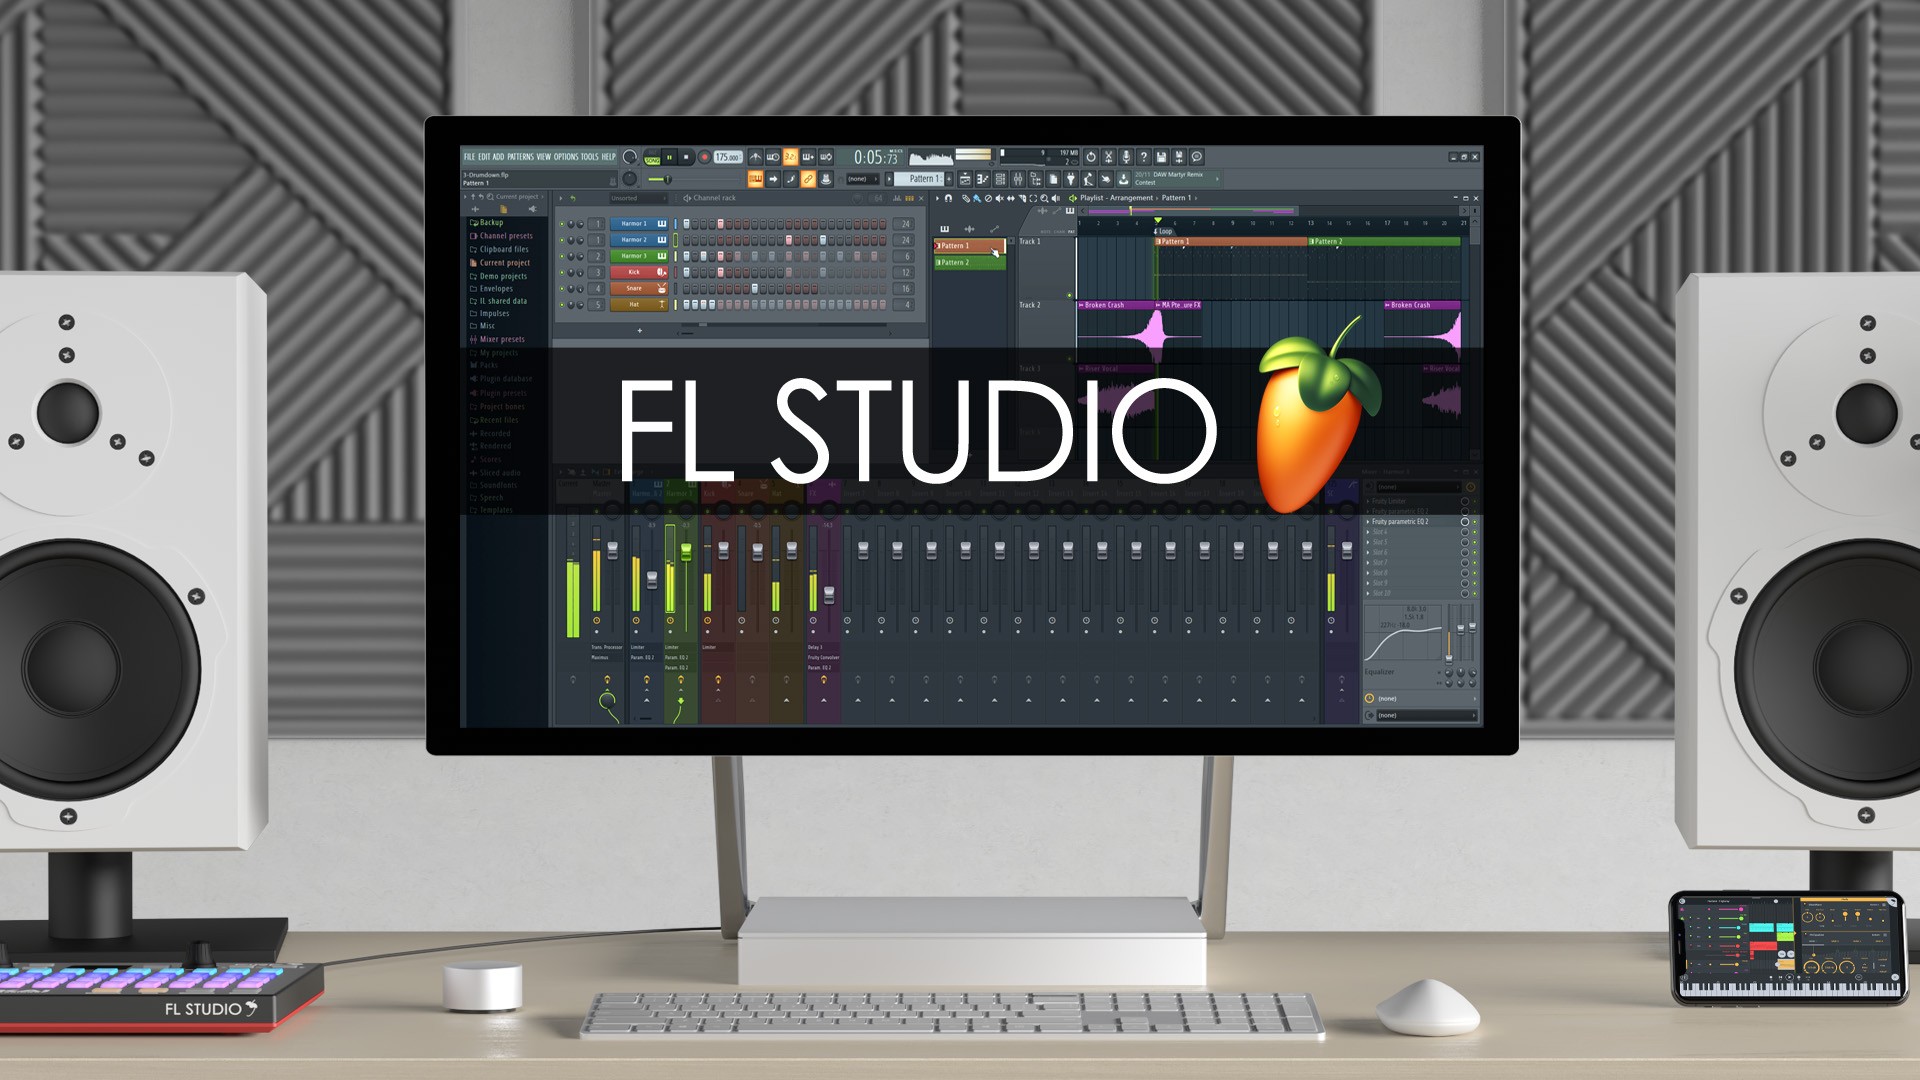 FL Studio by Image Line